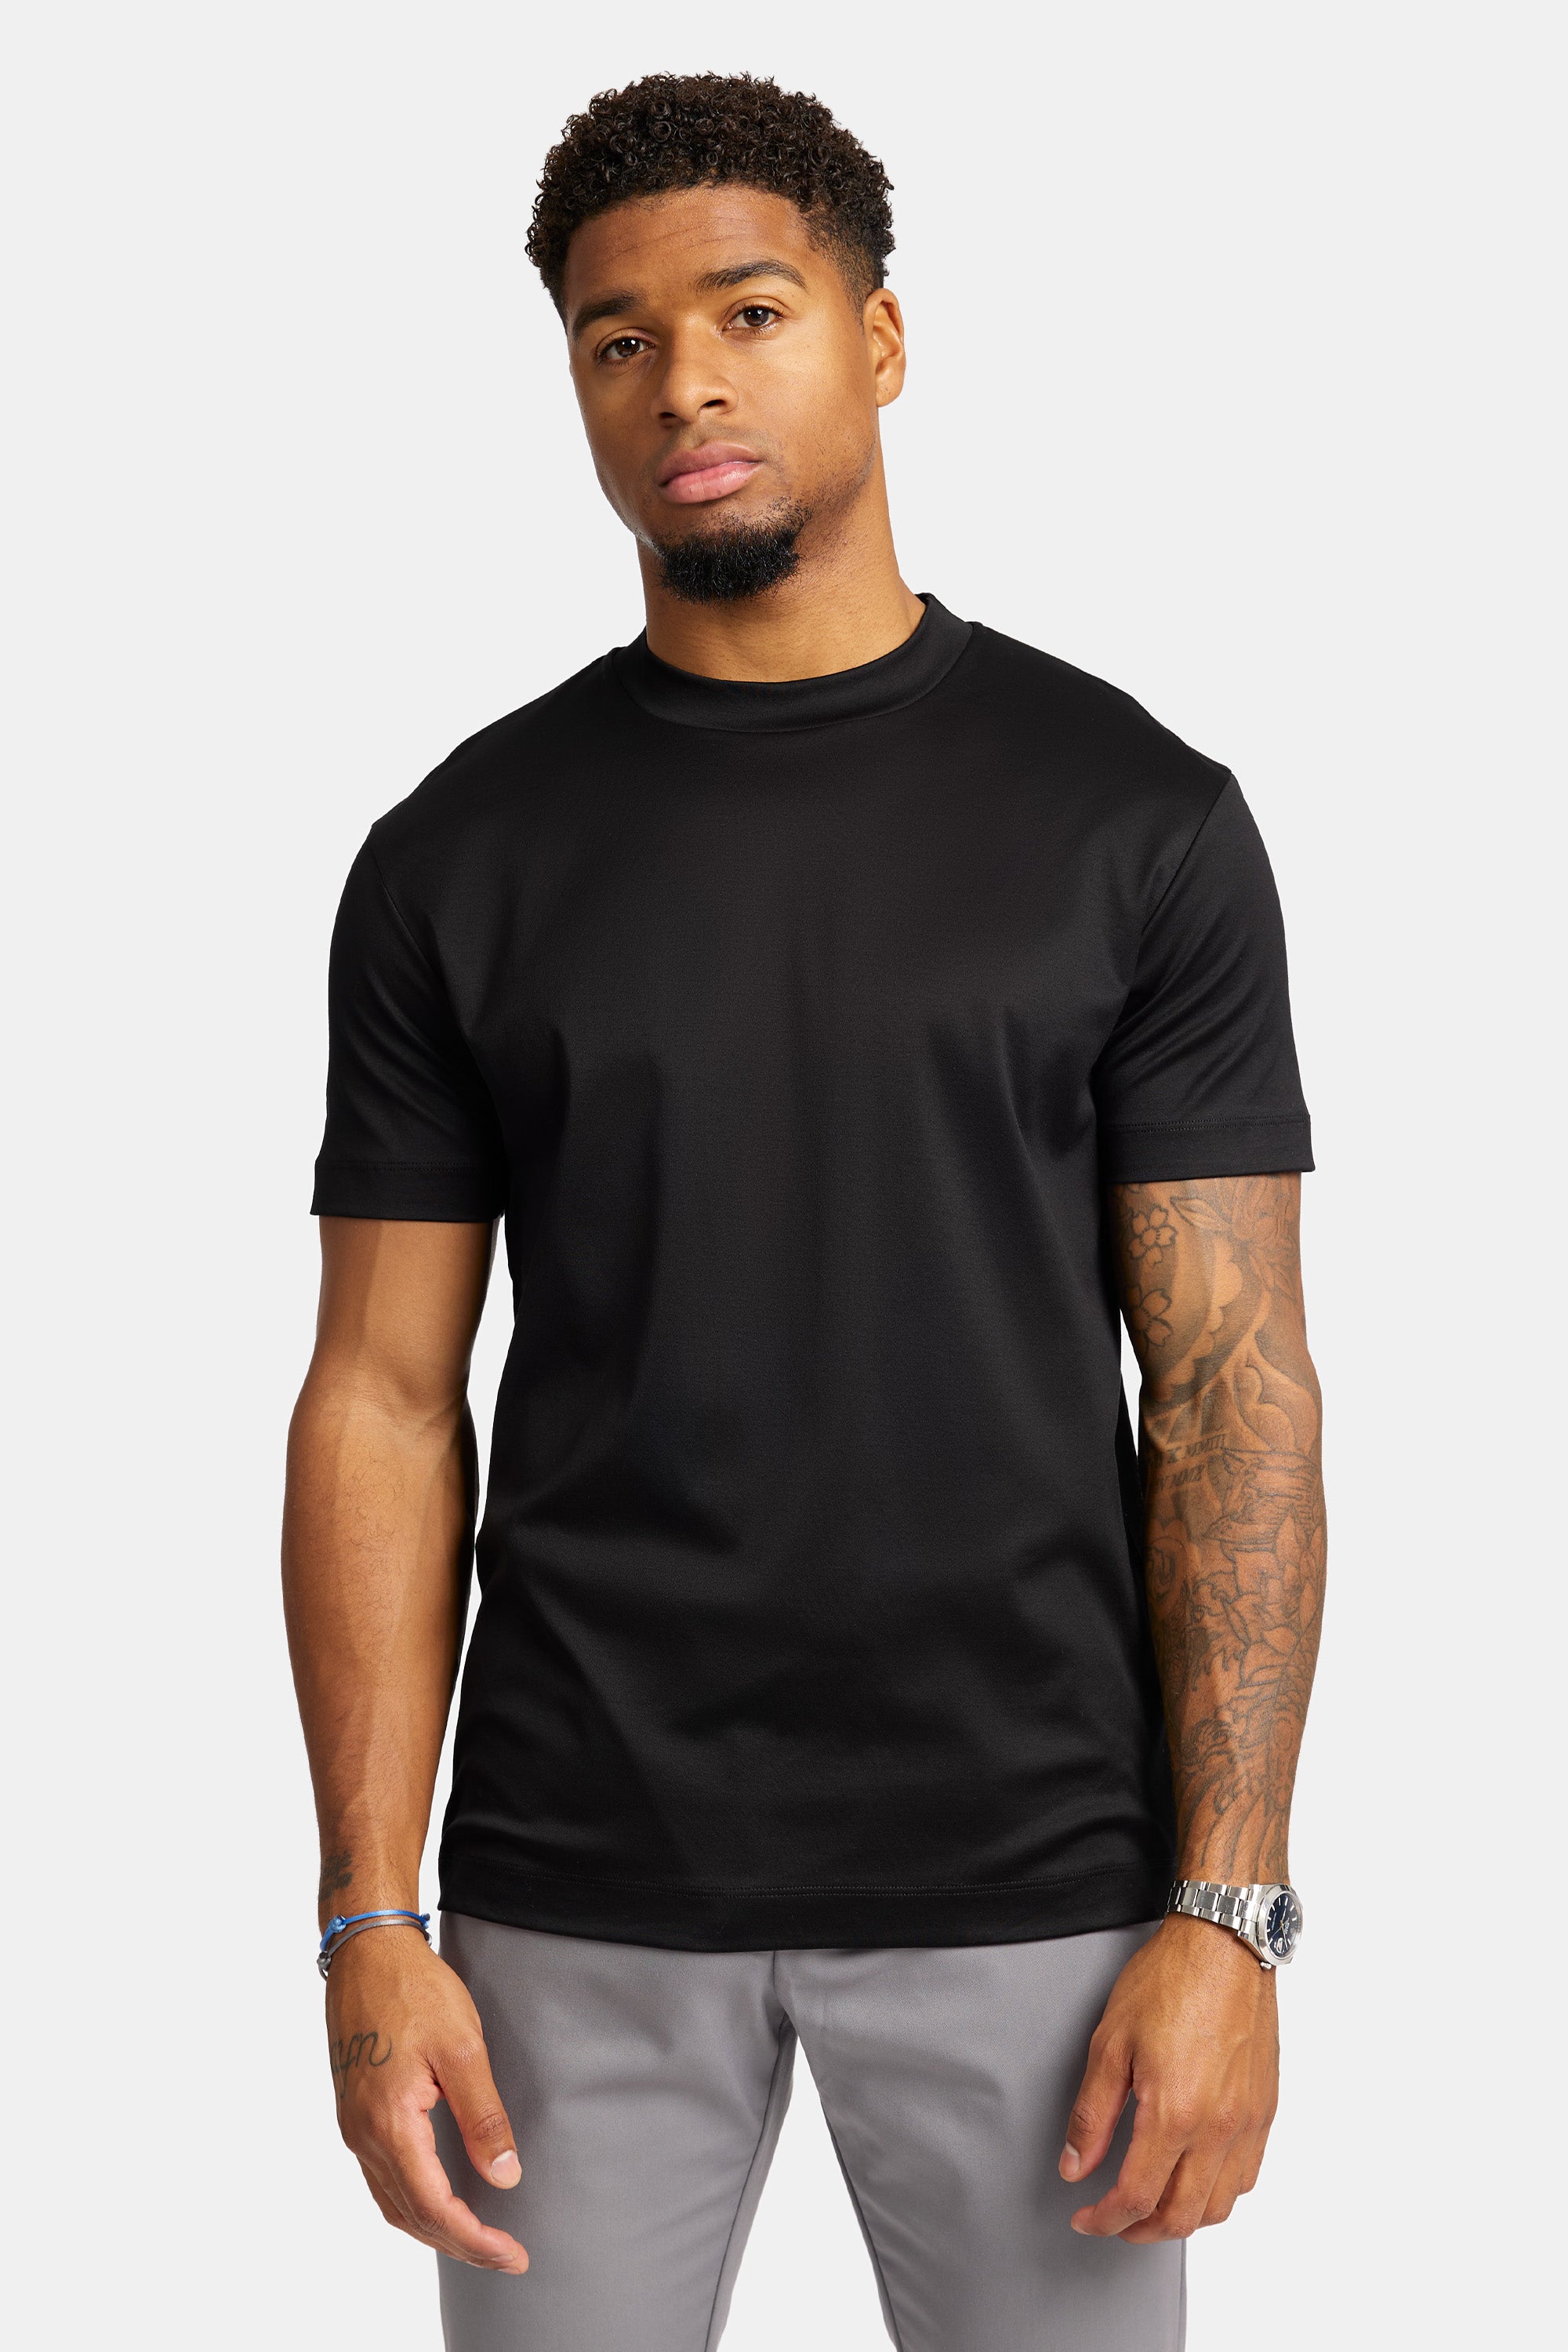 Onyx Black T-shirt